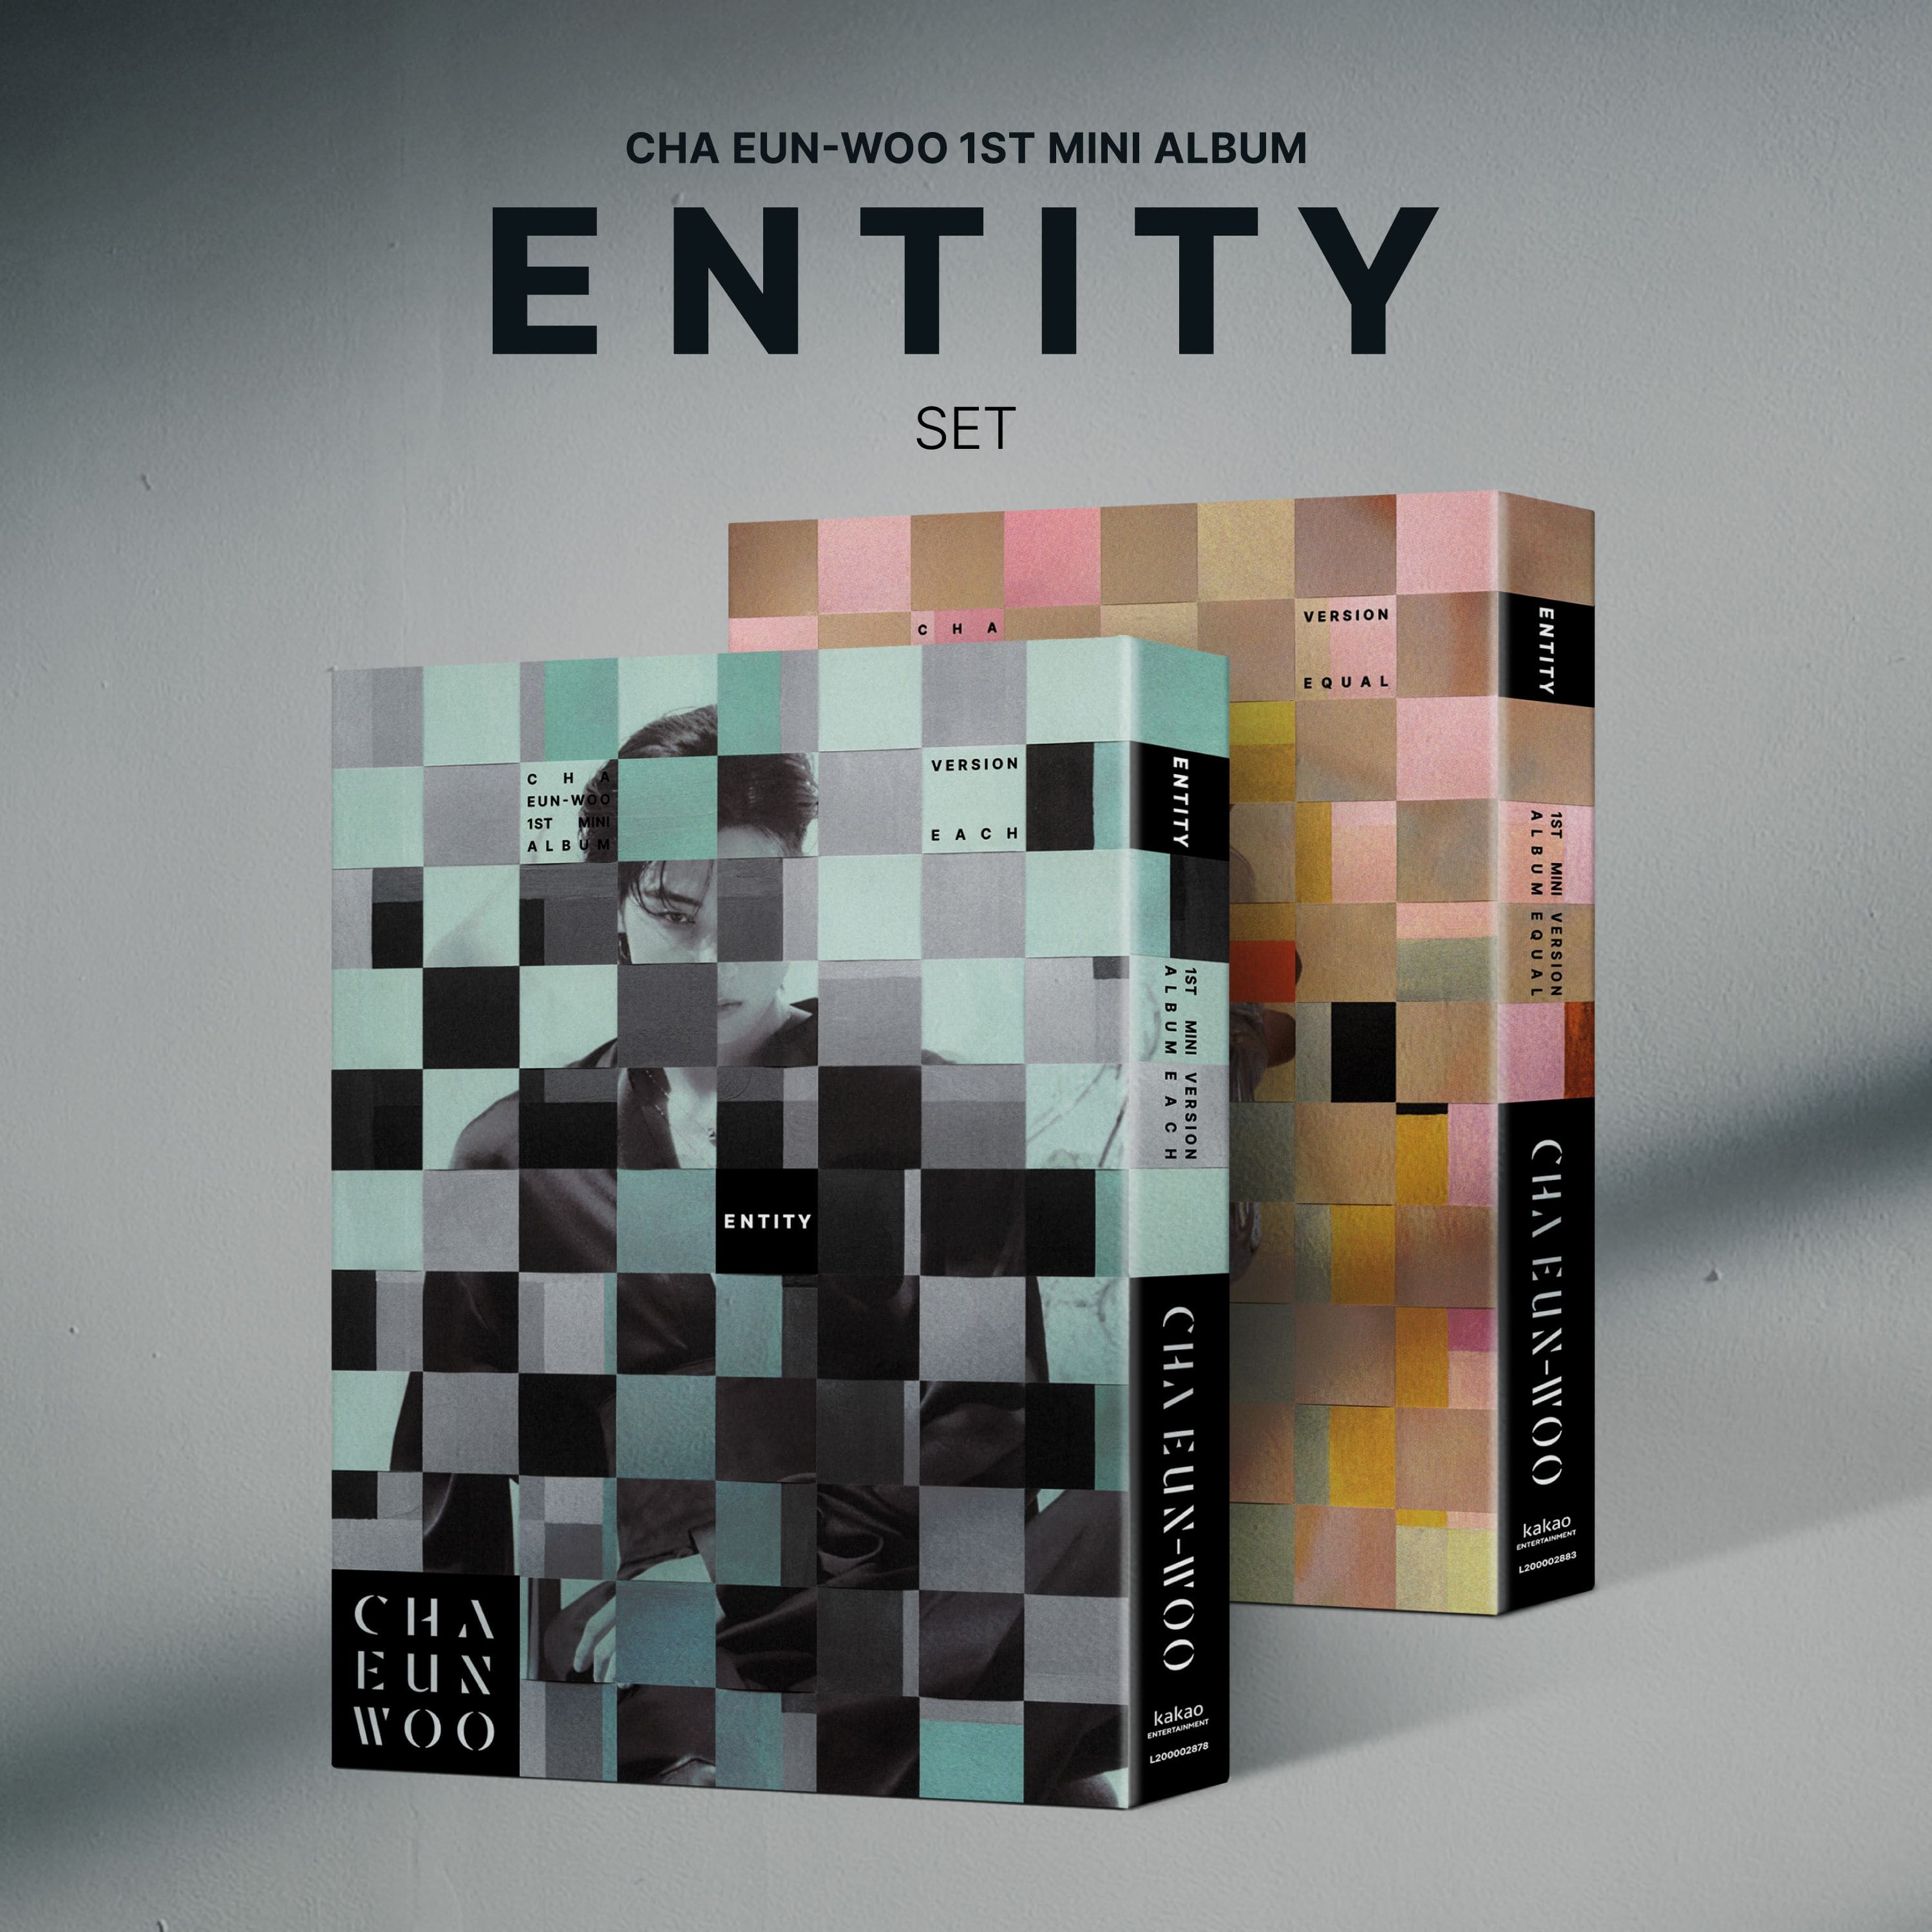 CHA EUNWOO 1st Mini Album ENTITY